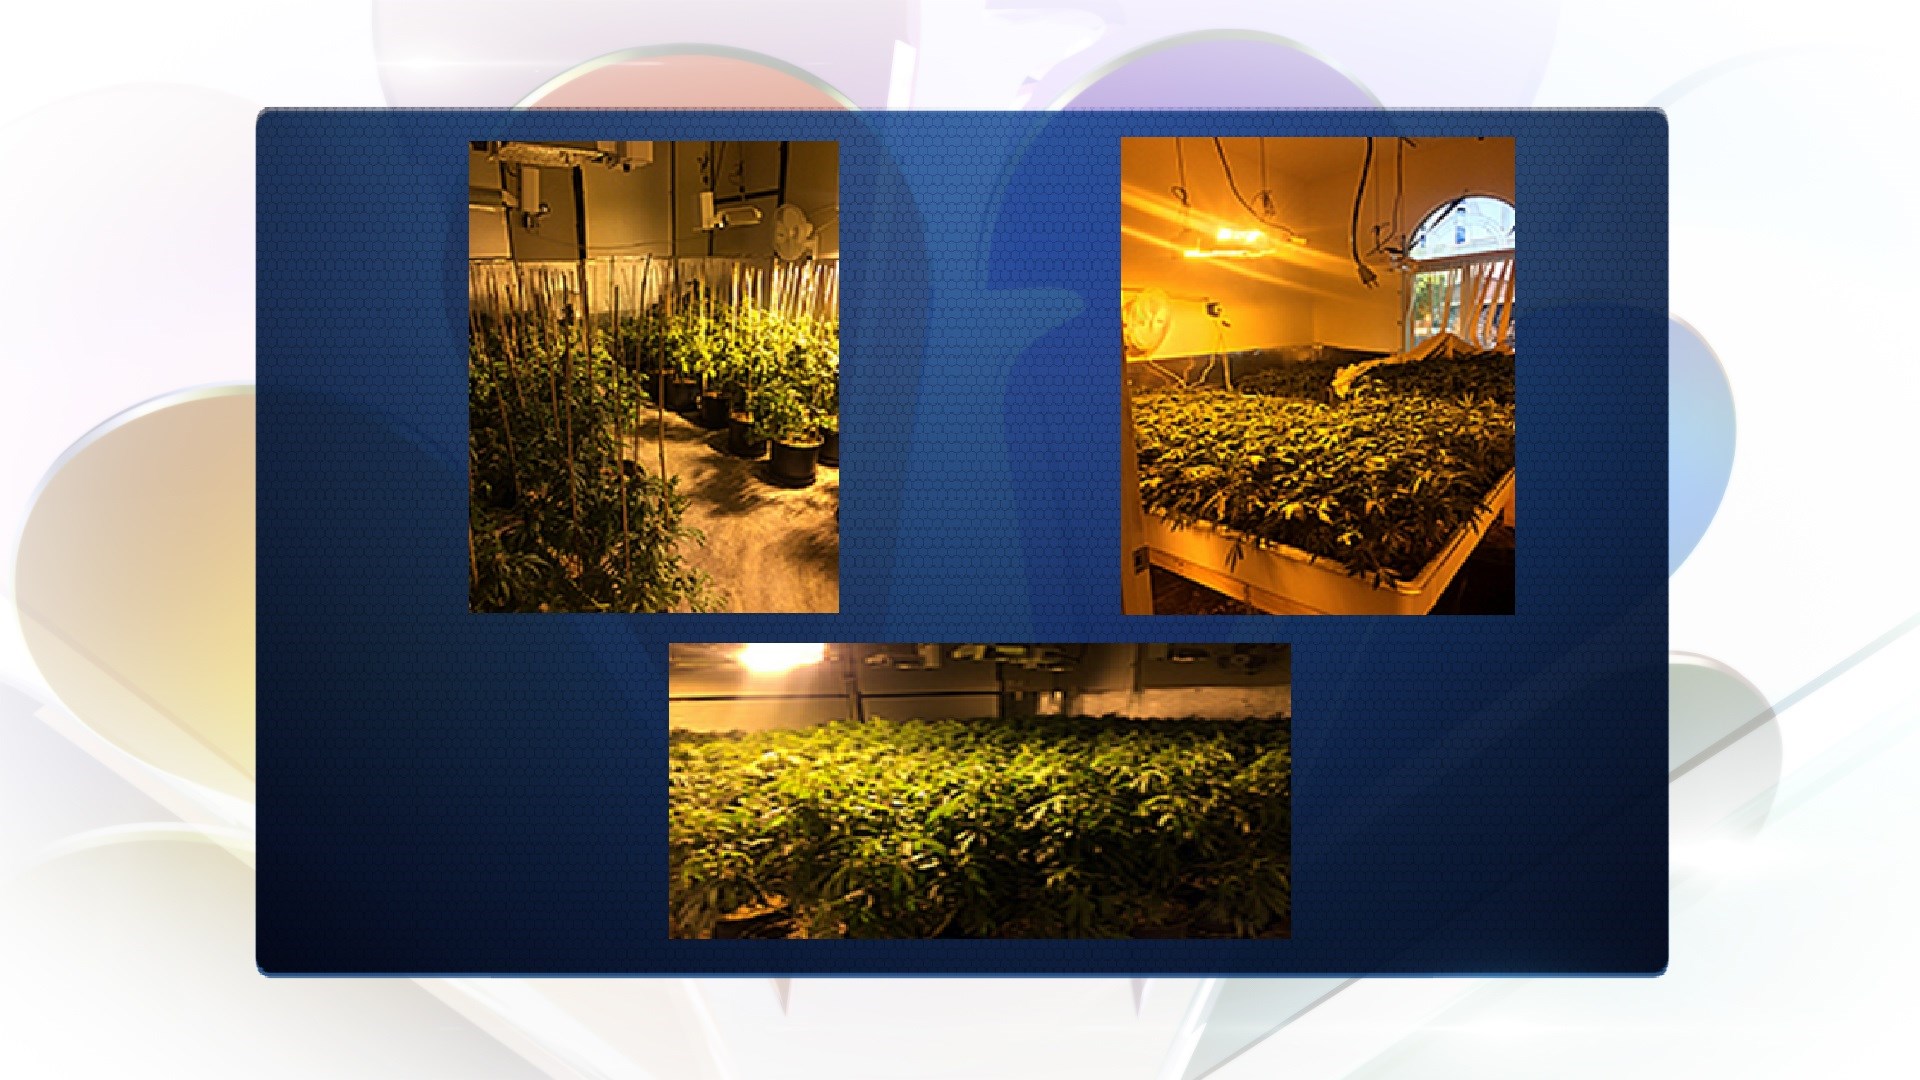 Large Marijuana Grow Operations Found in Rancho Mirage